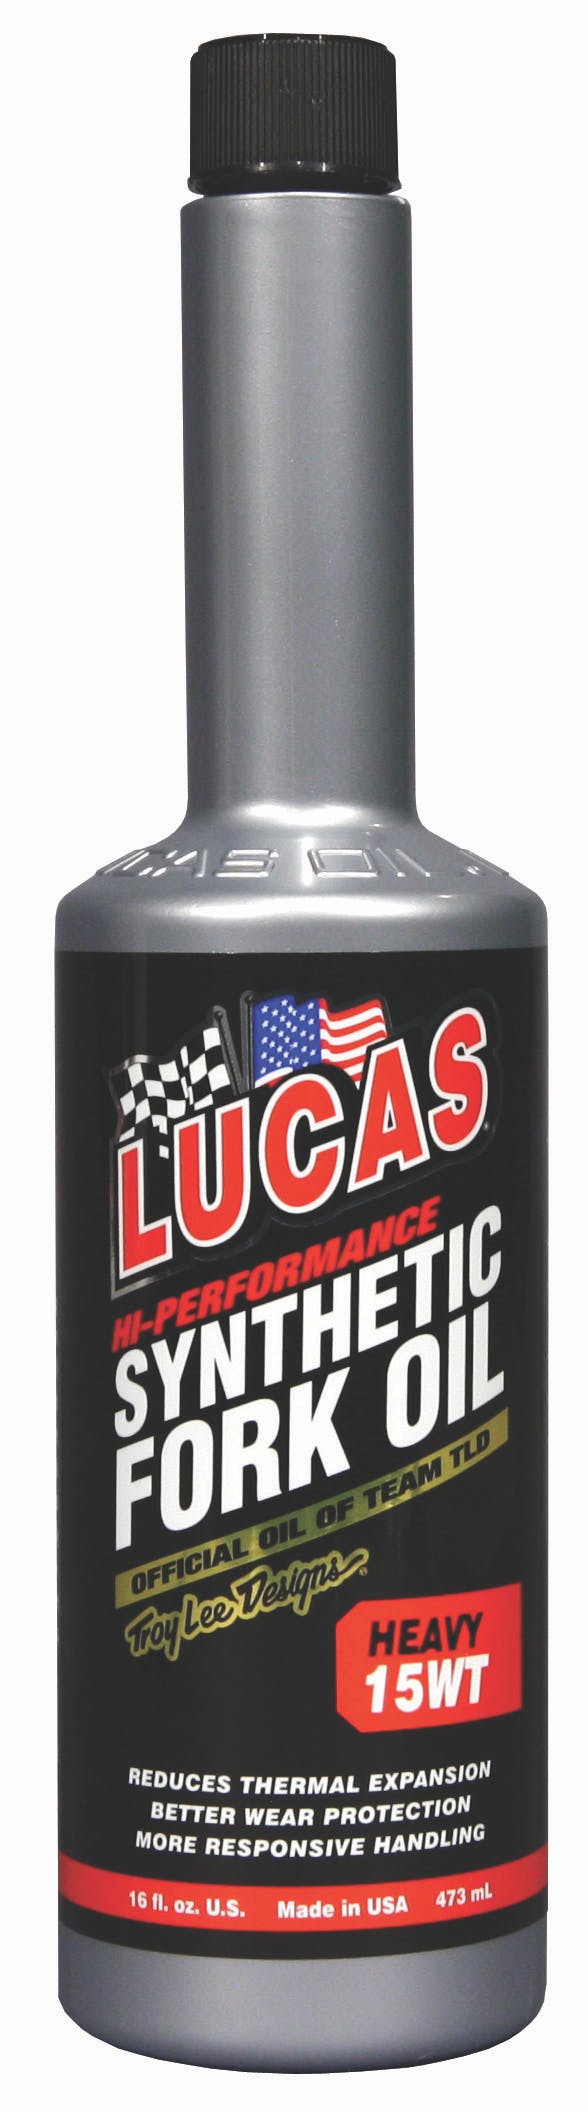 Lucas OIL 15wt. Heavy Synthetic Fork Oil (16 OZ) 20773